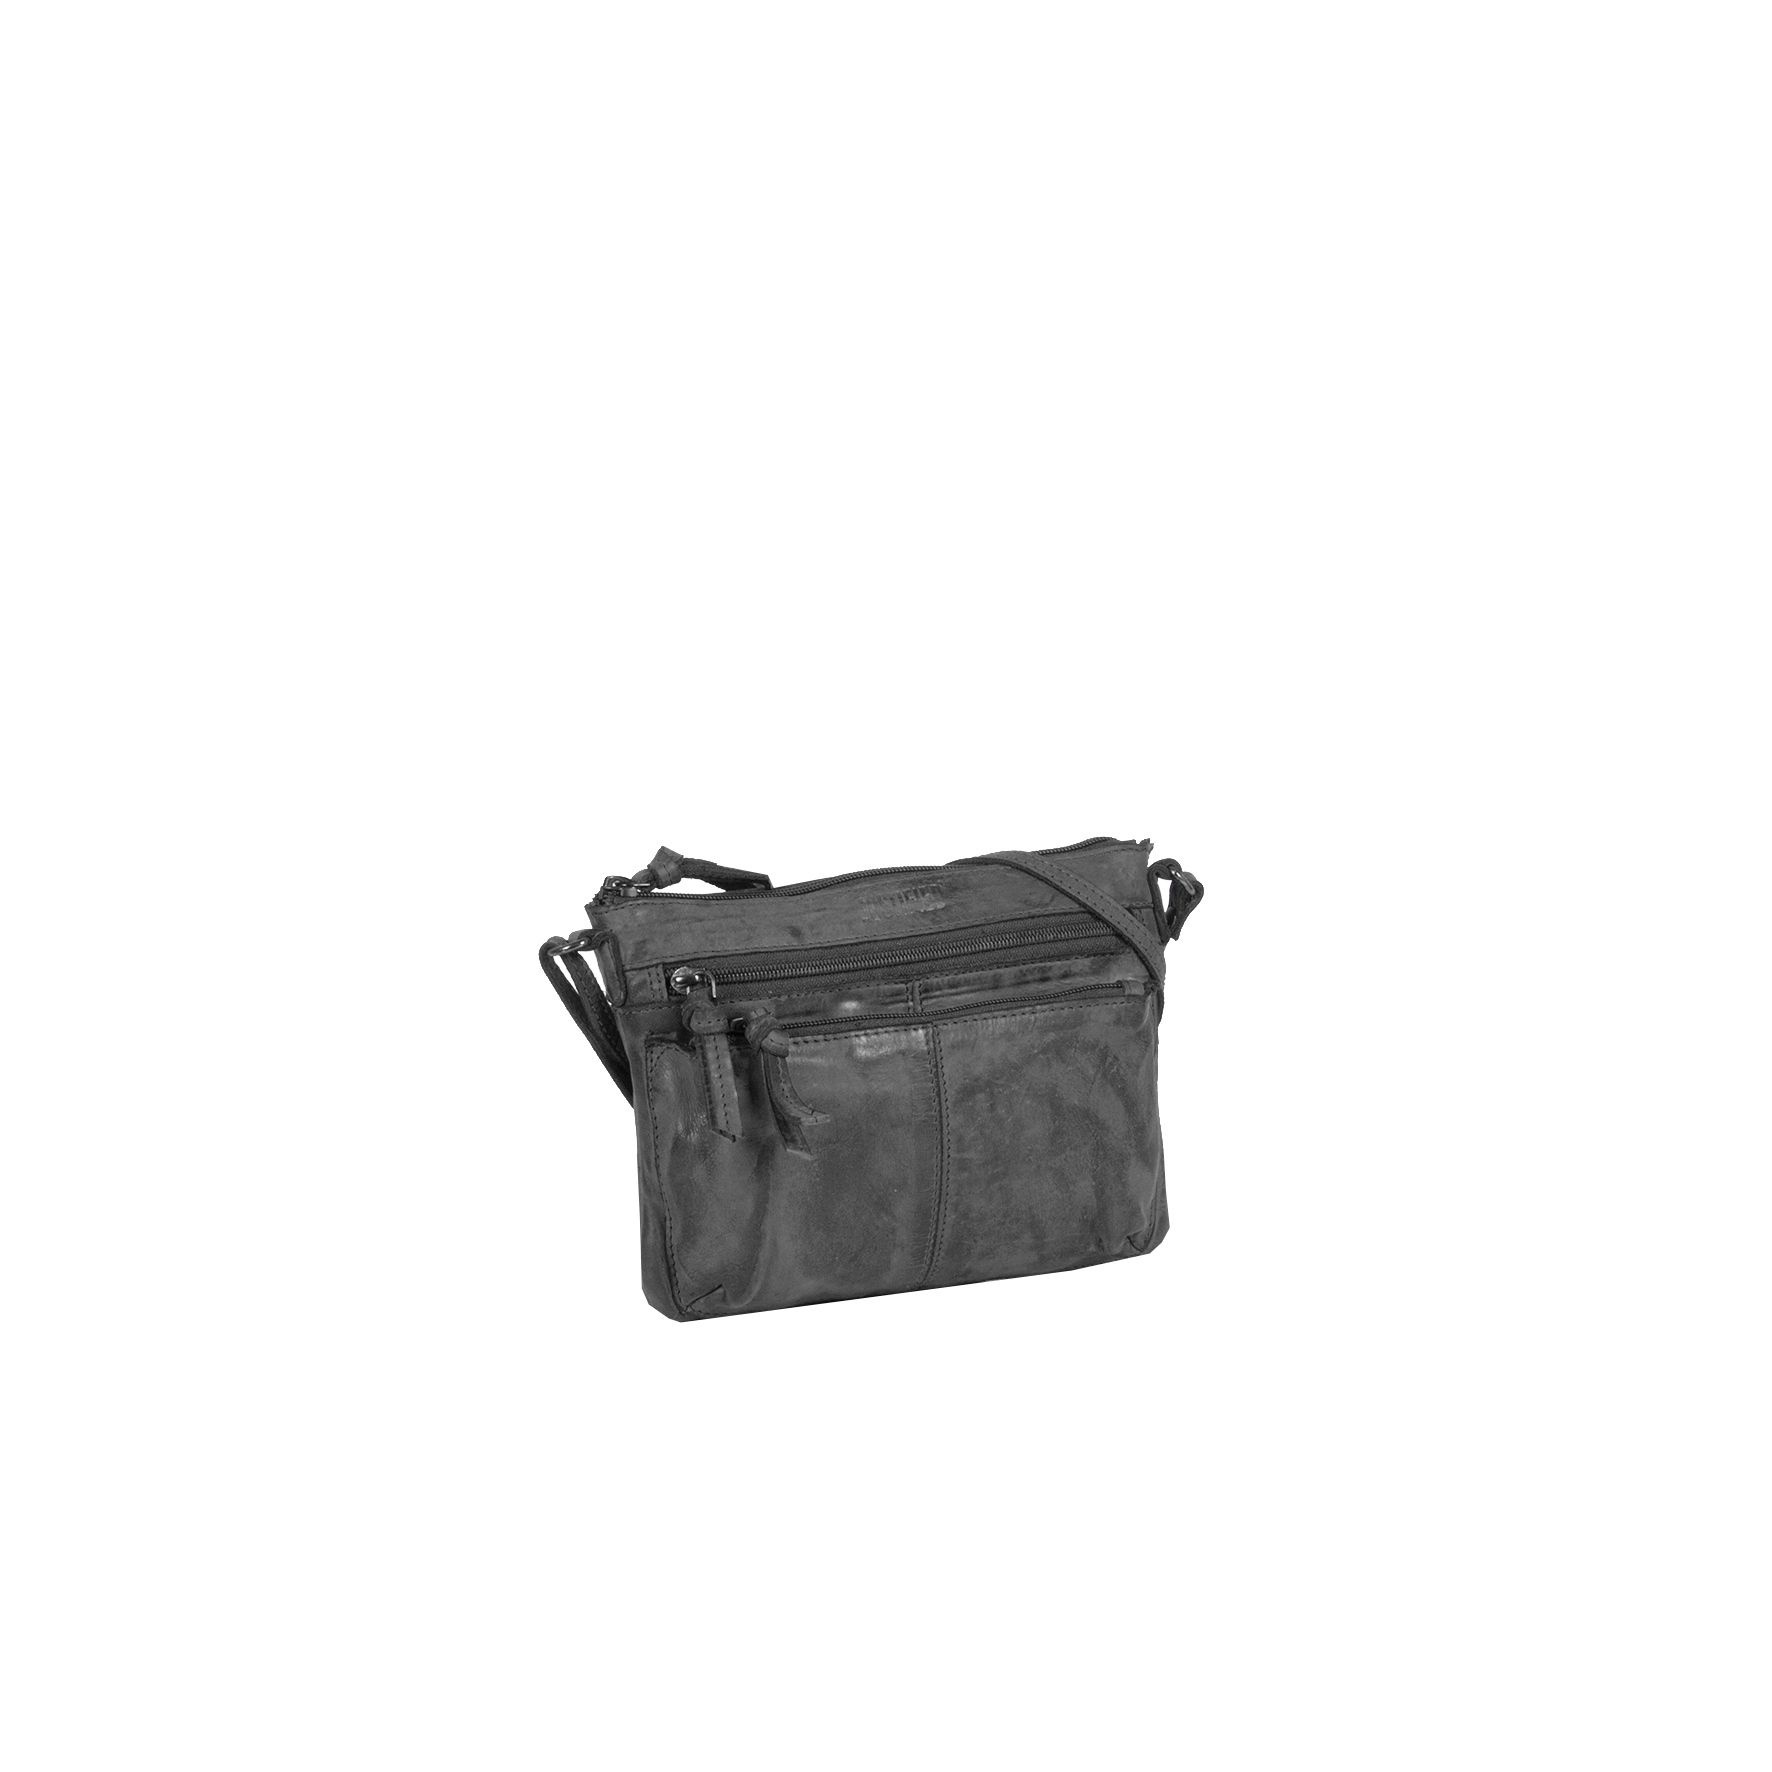 Justified Bags® Roma Top Zip Leather Black Shoulder Bag